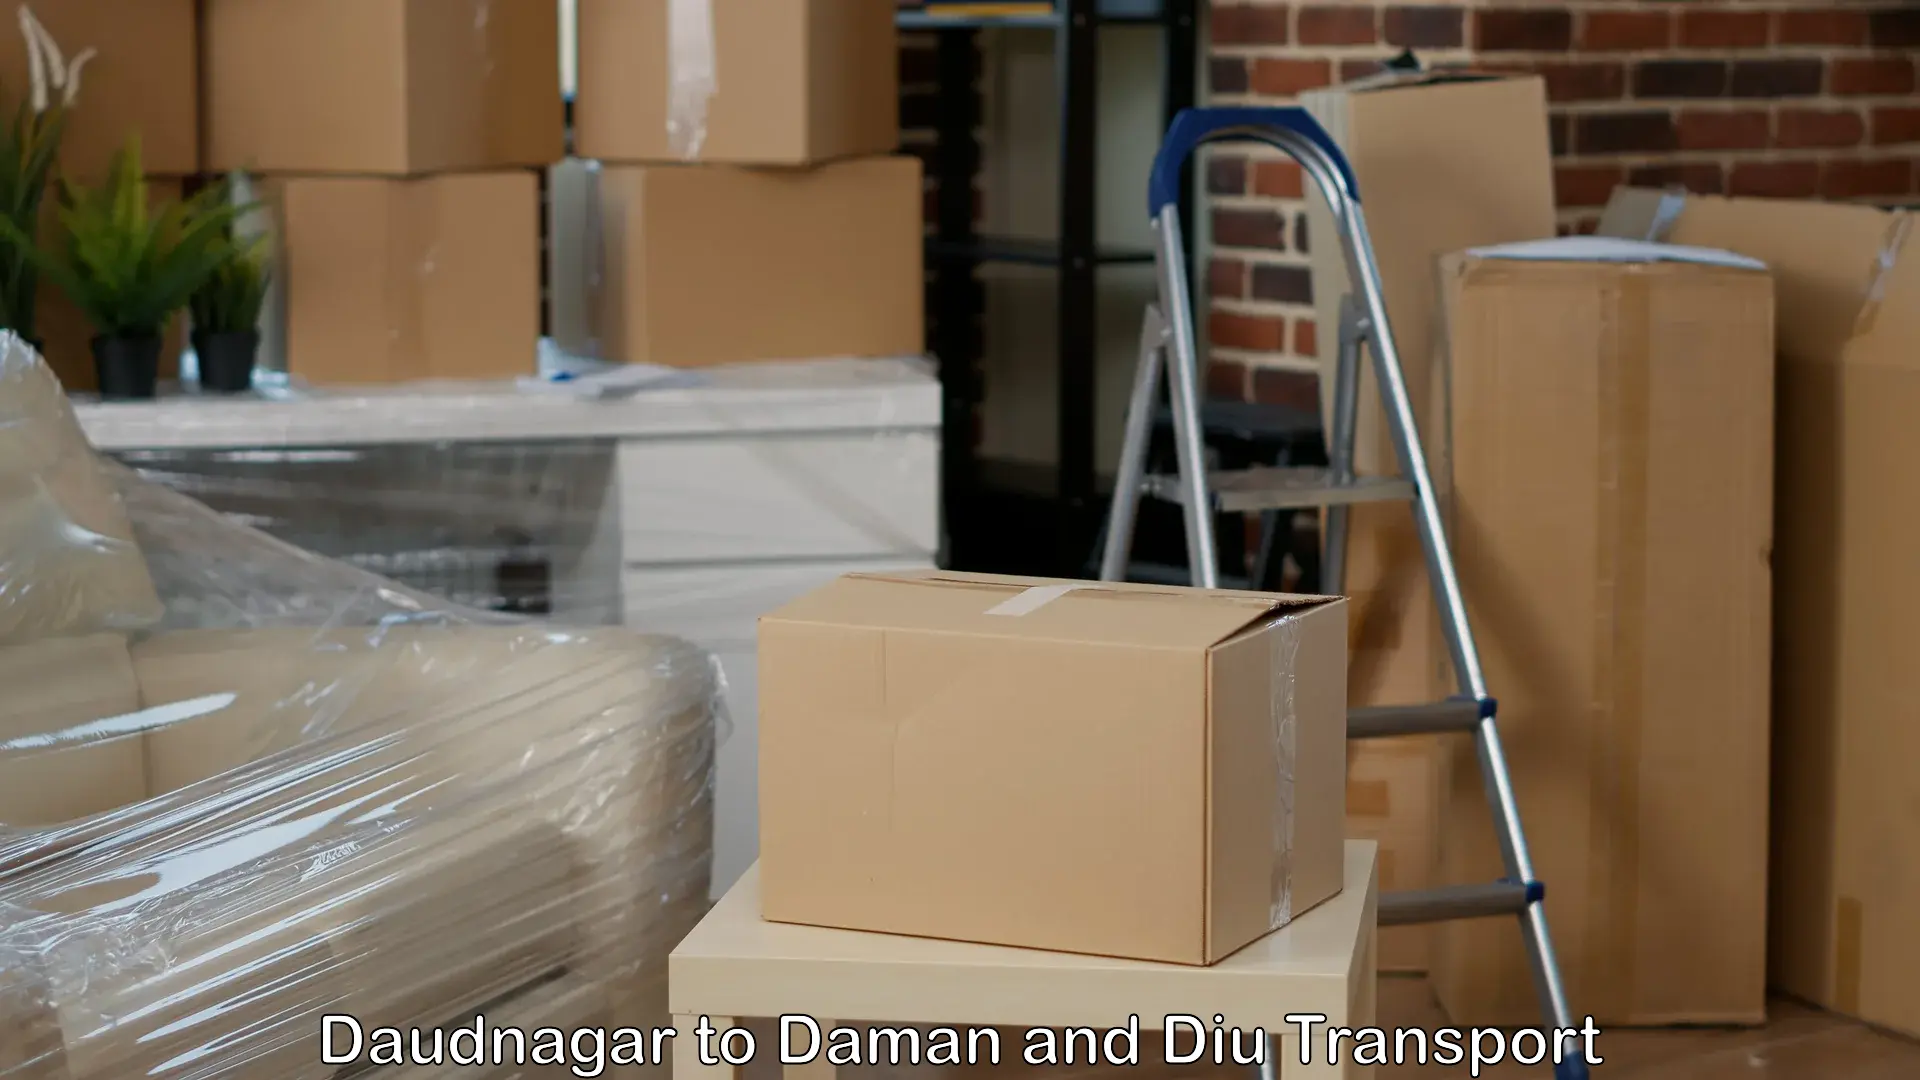 Transport in sharing Daudnagar to Daman and Diu